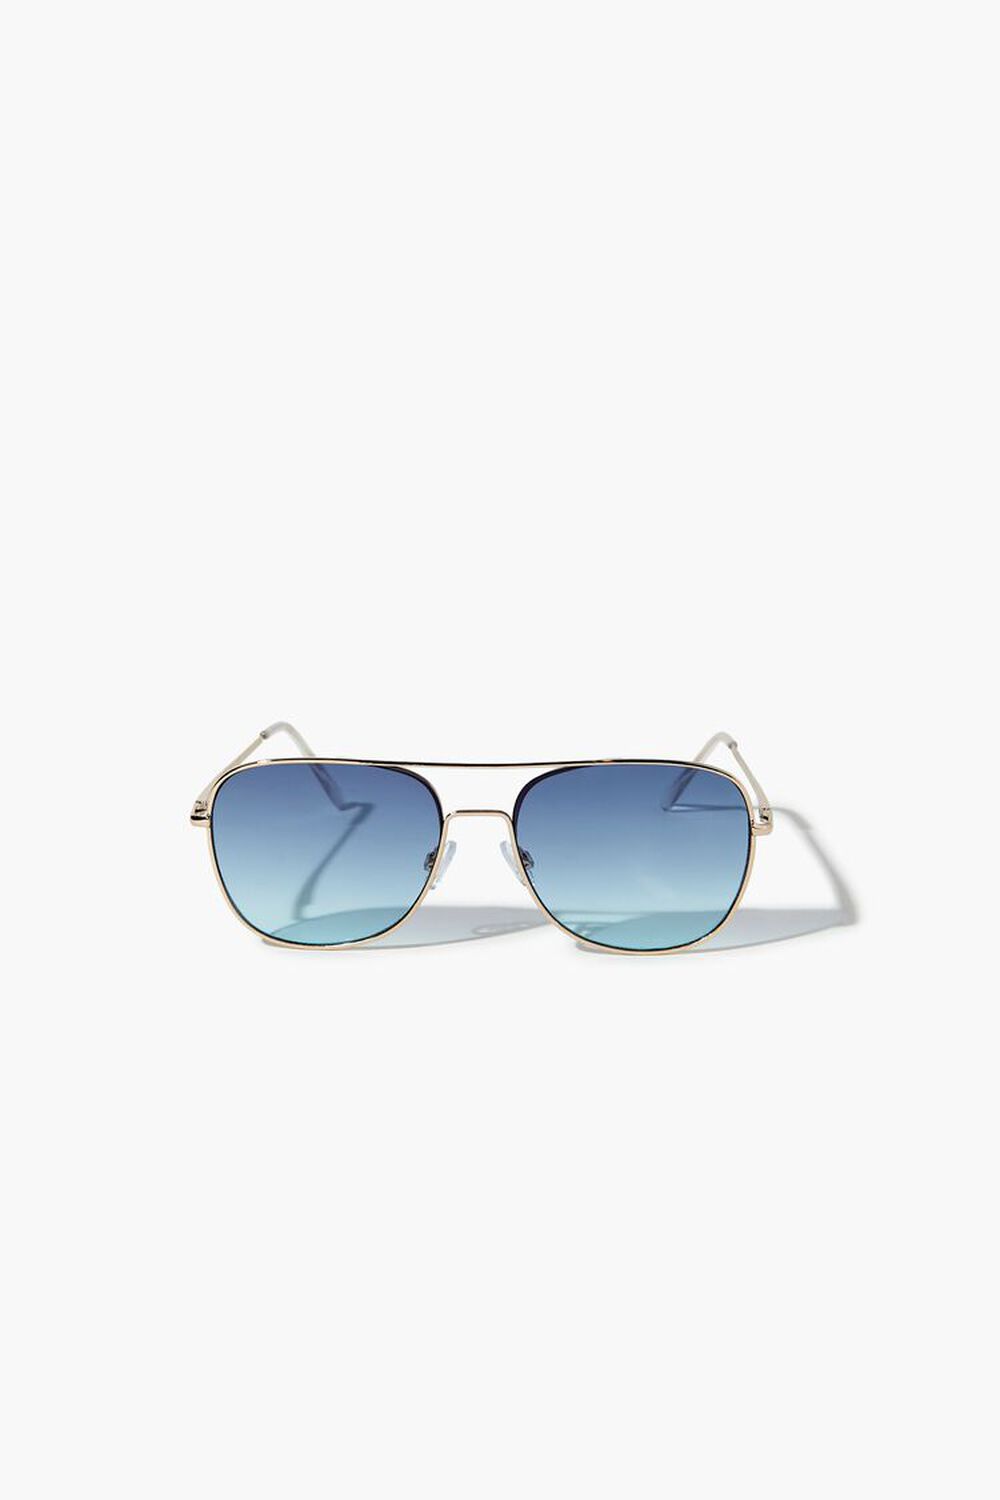 GOLD/BLUE Tinted Aviator Sunglasses, image 1